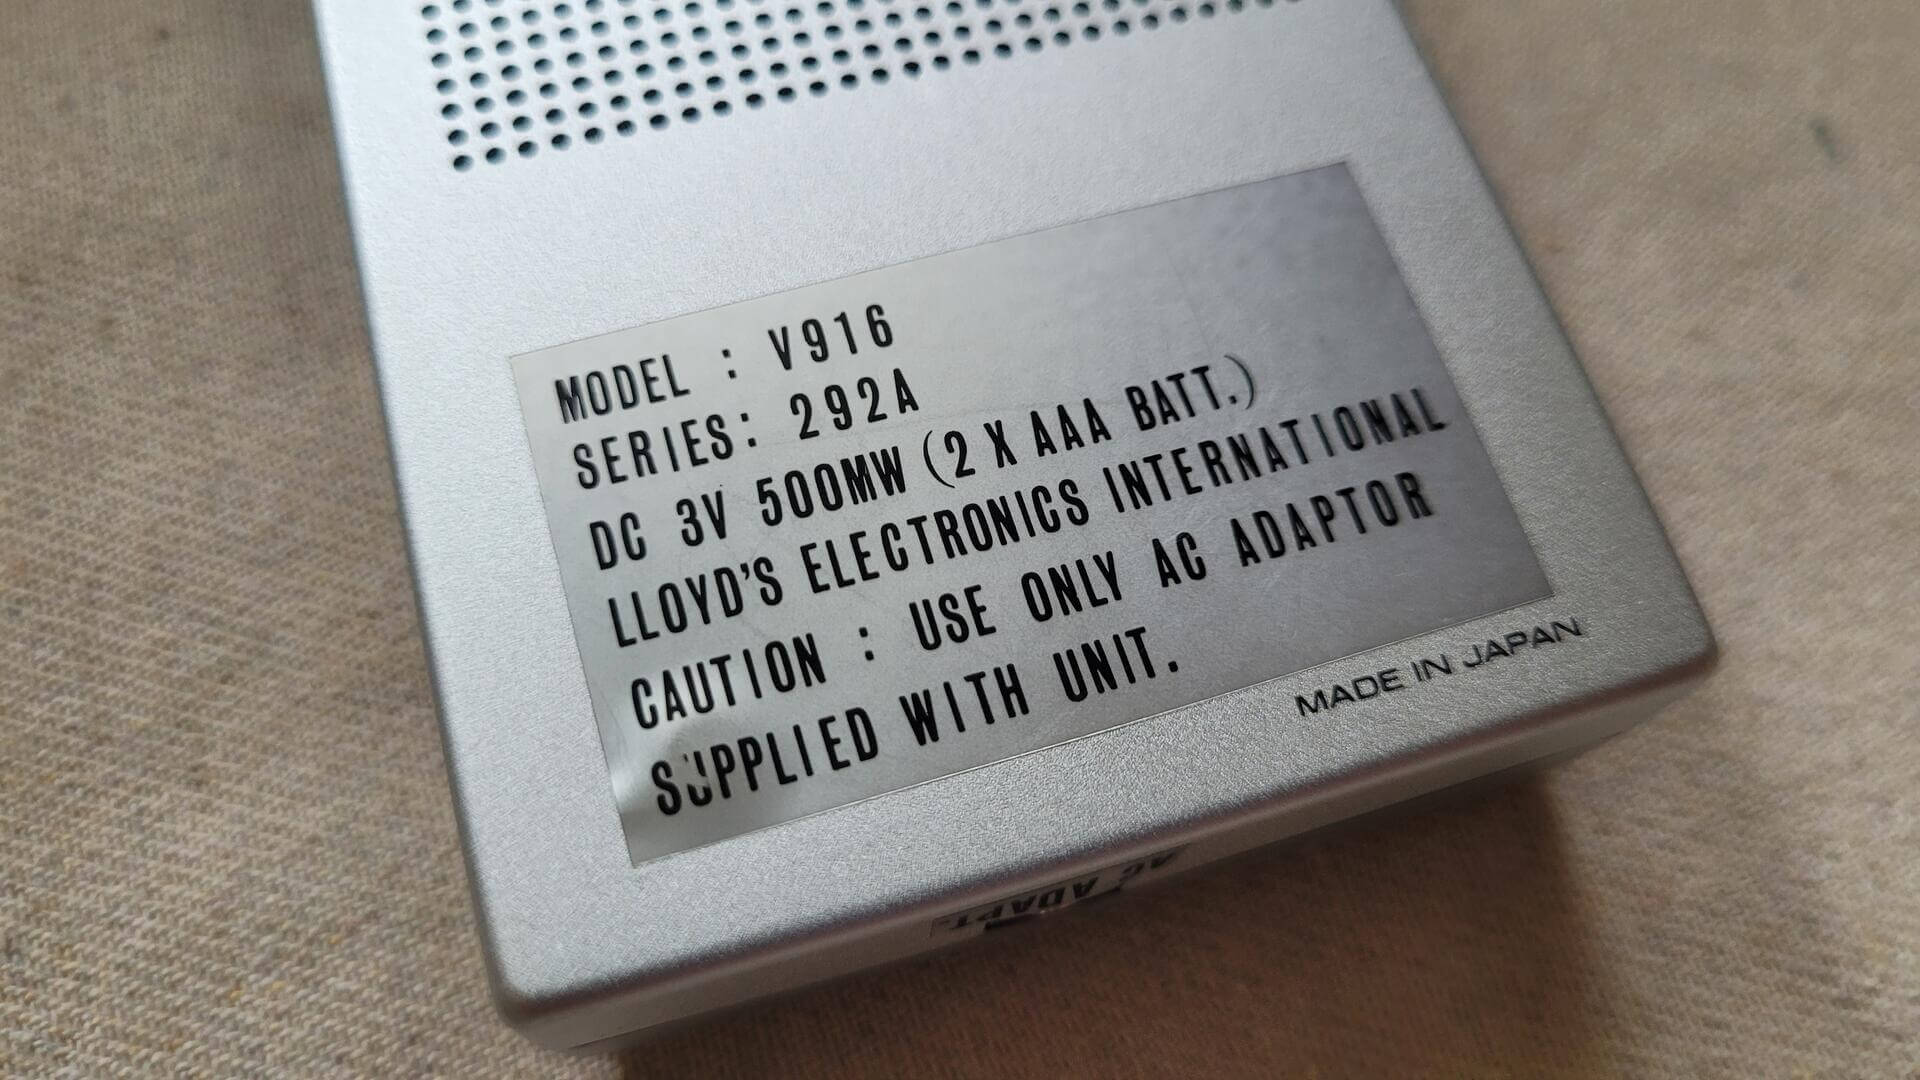 Lloyd Electronics International Cassette Recorder Model V916 - Vintage Made in Japan Electronics Collectible Gadgets